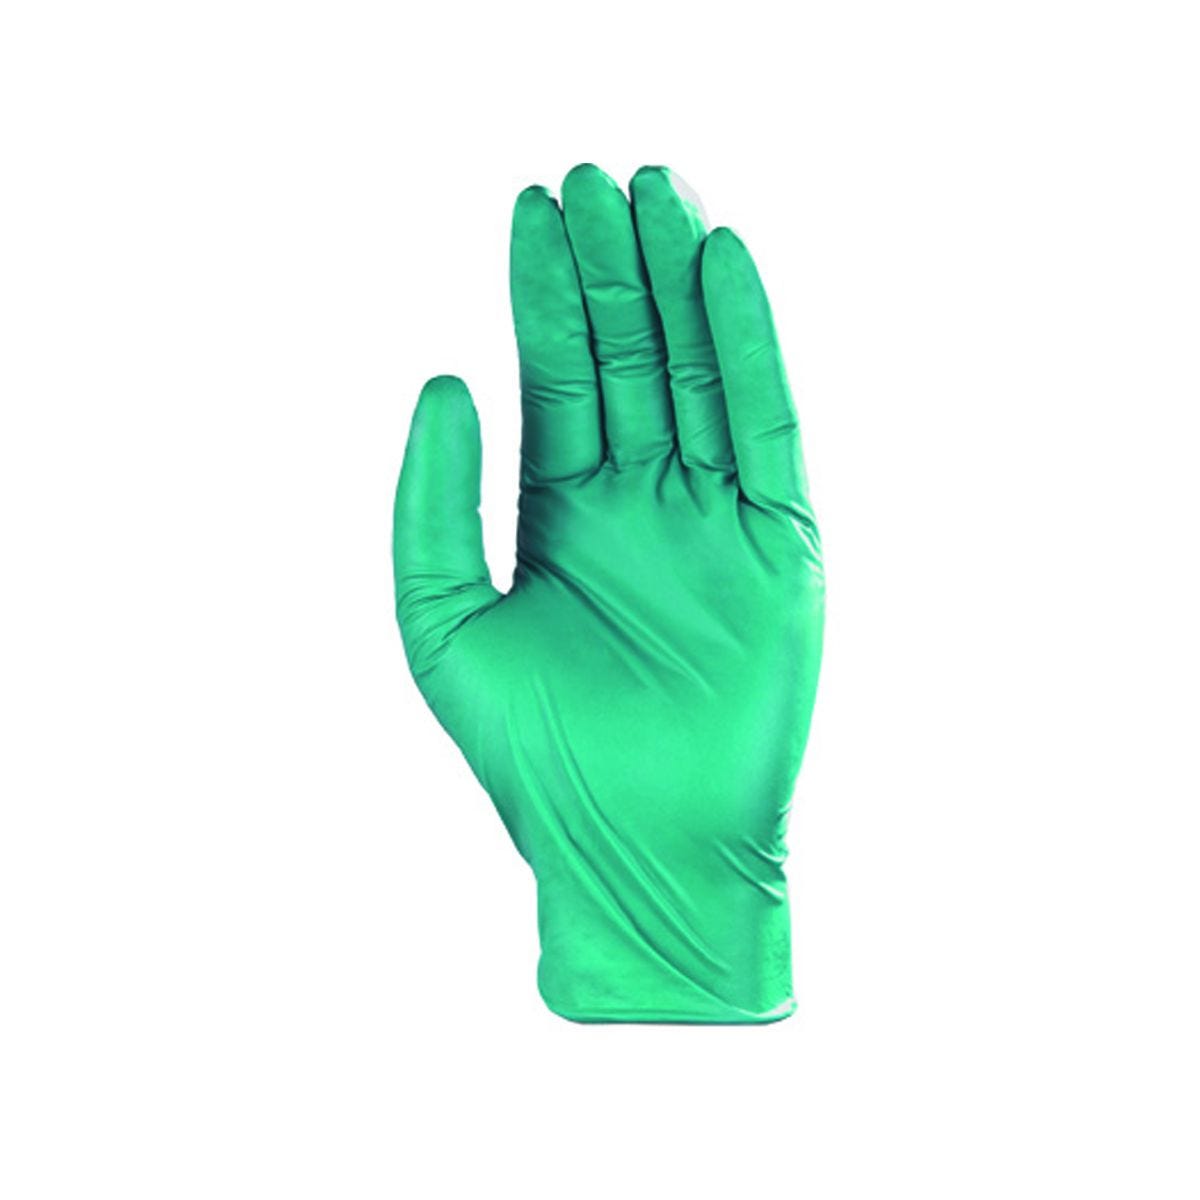 Gants nitrile vert (boîte de 100 gants) - COVERGUARD - Taille M-8 0